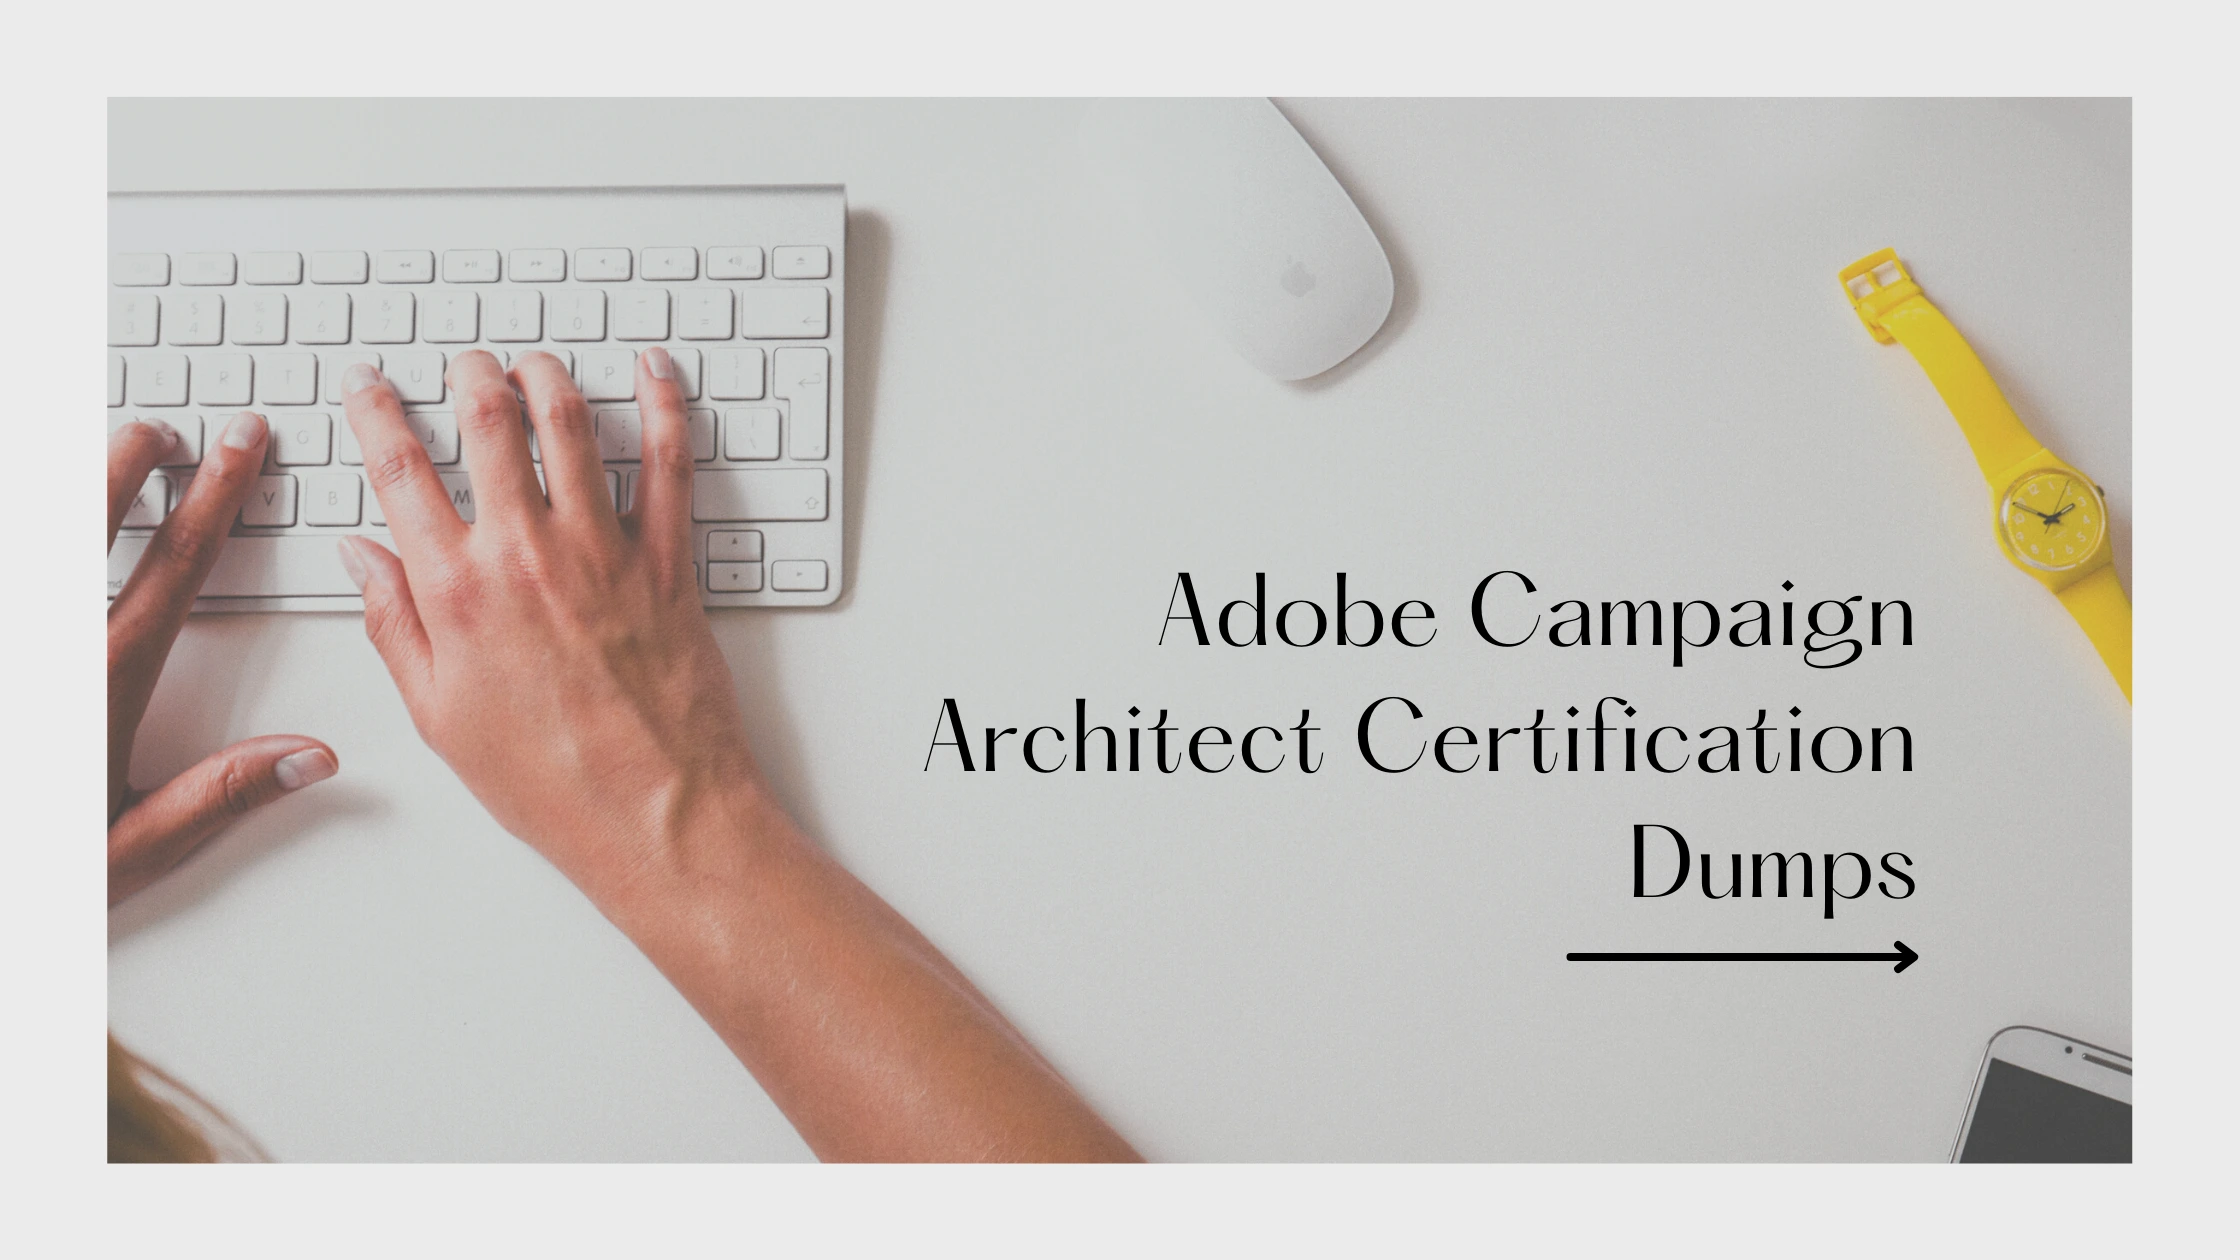 Adobe Campaign Architect Certification Dumps success